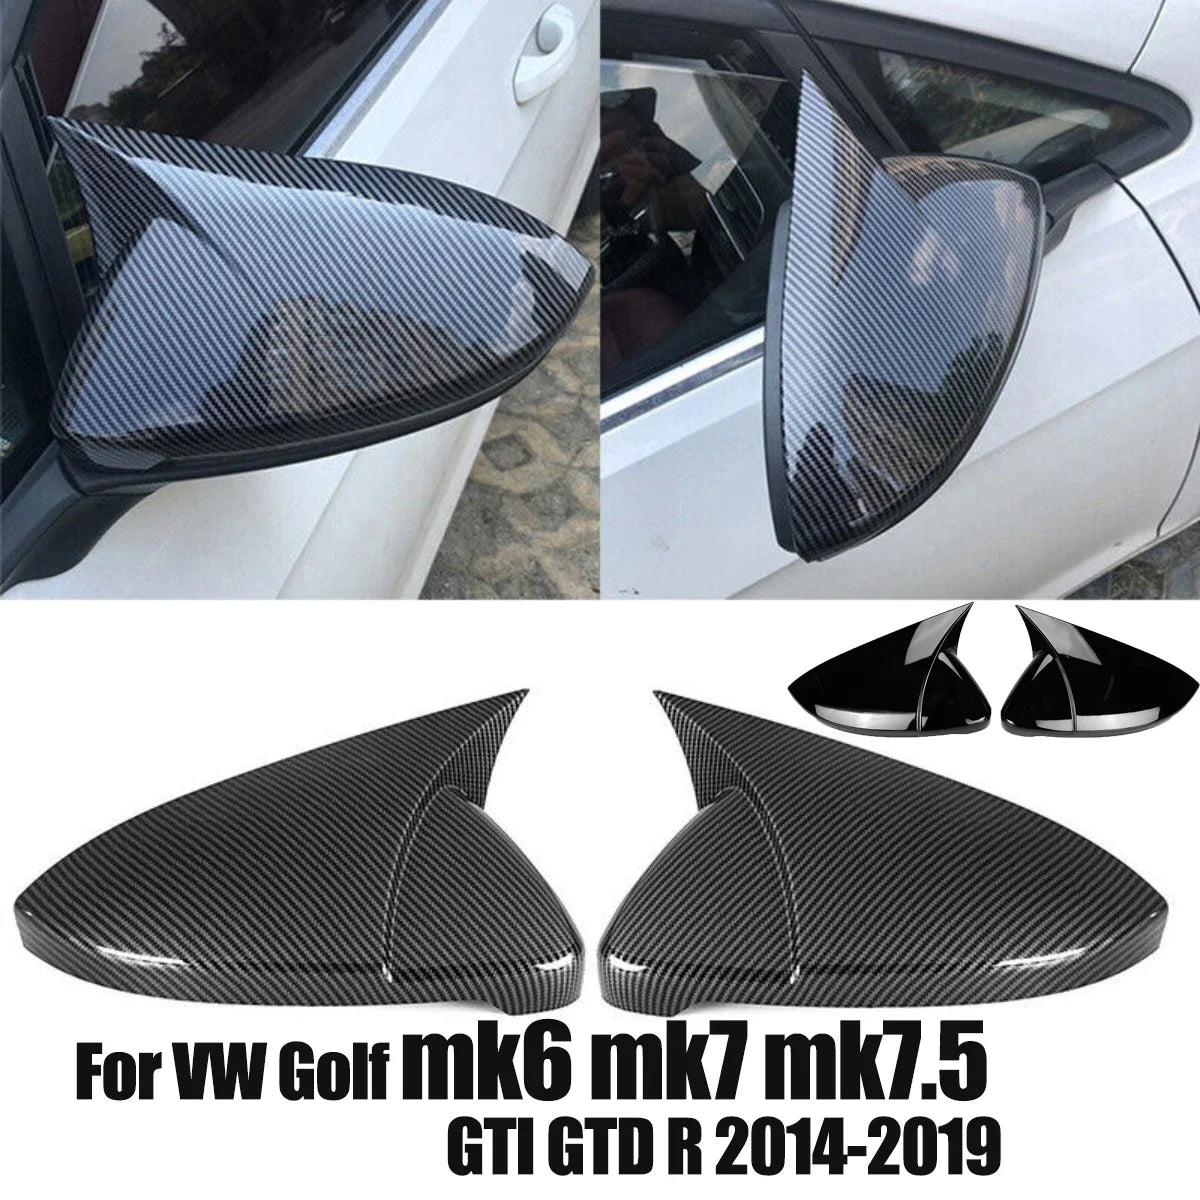 For VW Golf MK6 MK7 MK7.5 GTI R GTD All 2009-2020 Pair Side RearView Mirror Cover Caps Mirror Case Gloss Black / Carbon Look